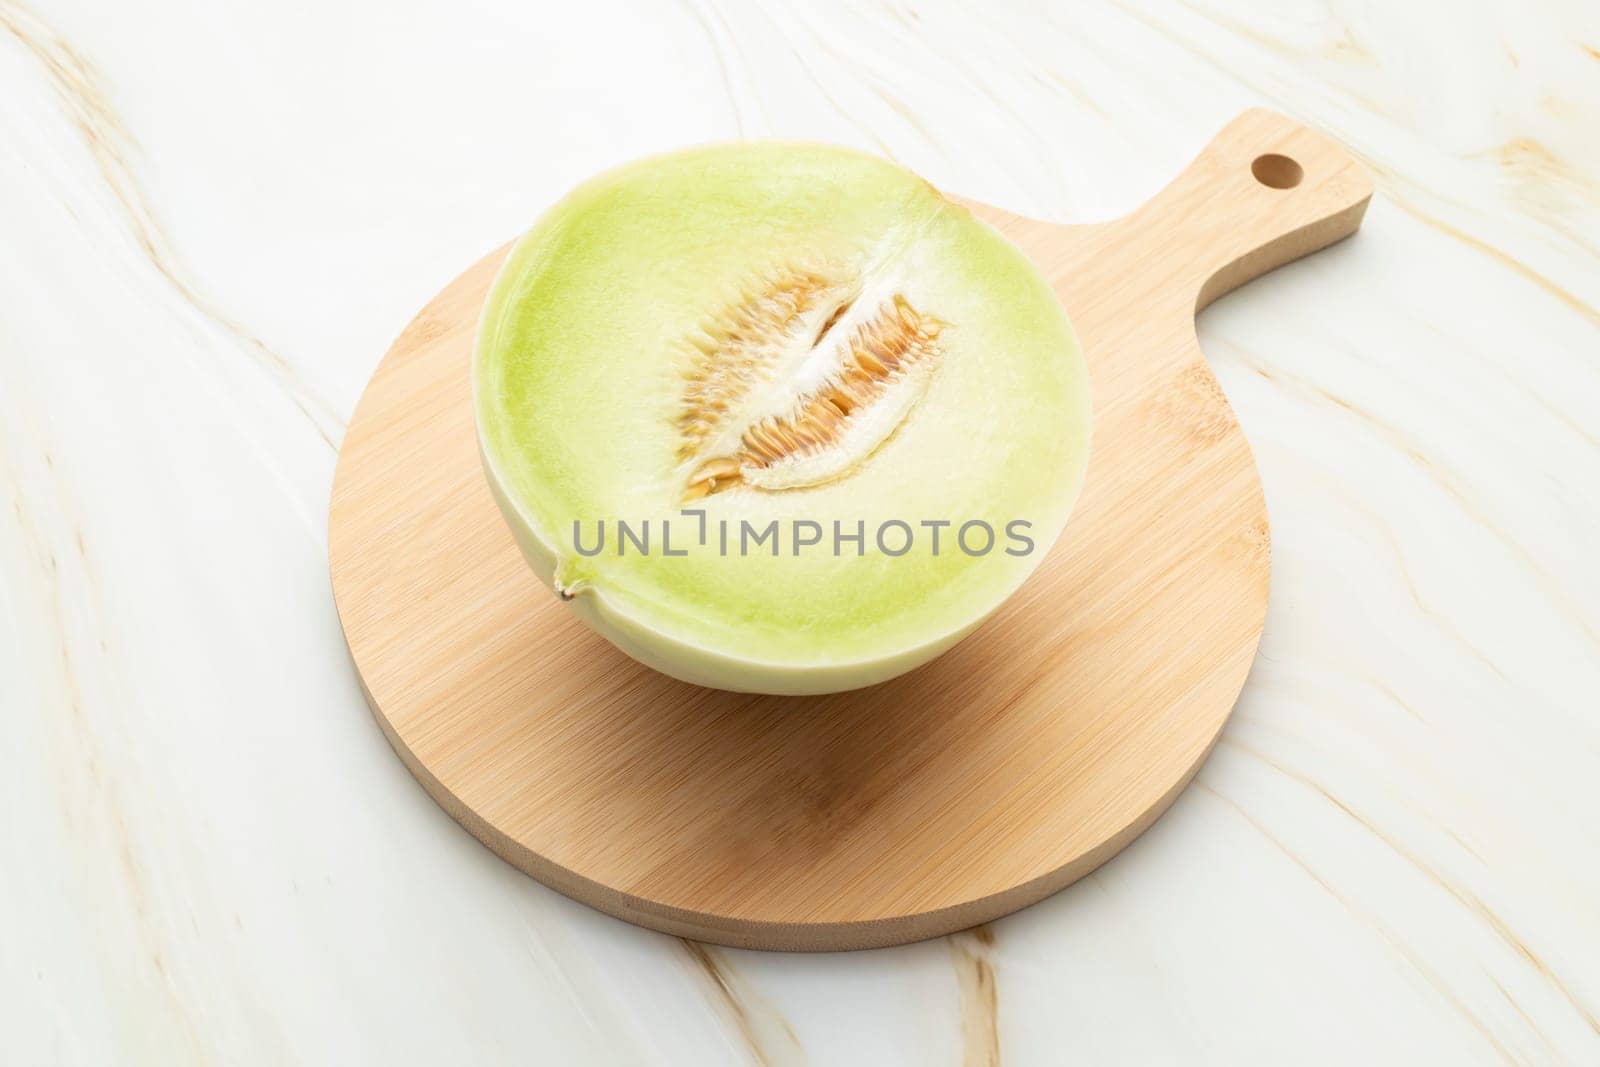 Cut Organic Honeydew Melon On Wooden Cutting Board on Granite Table, Cucumis Melo Inodorus Group. Ripe Nutritious Summer Juicy Fruit. Horizontal Plane. Harvesting, Top View by netatsi